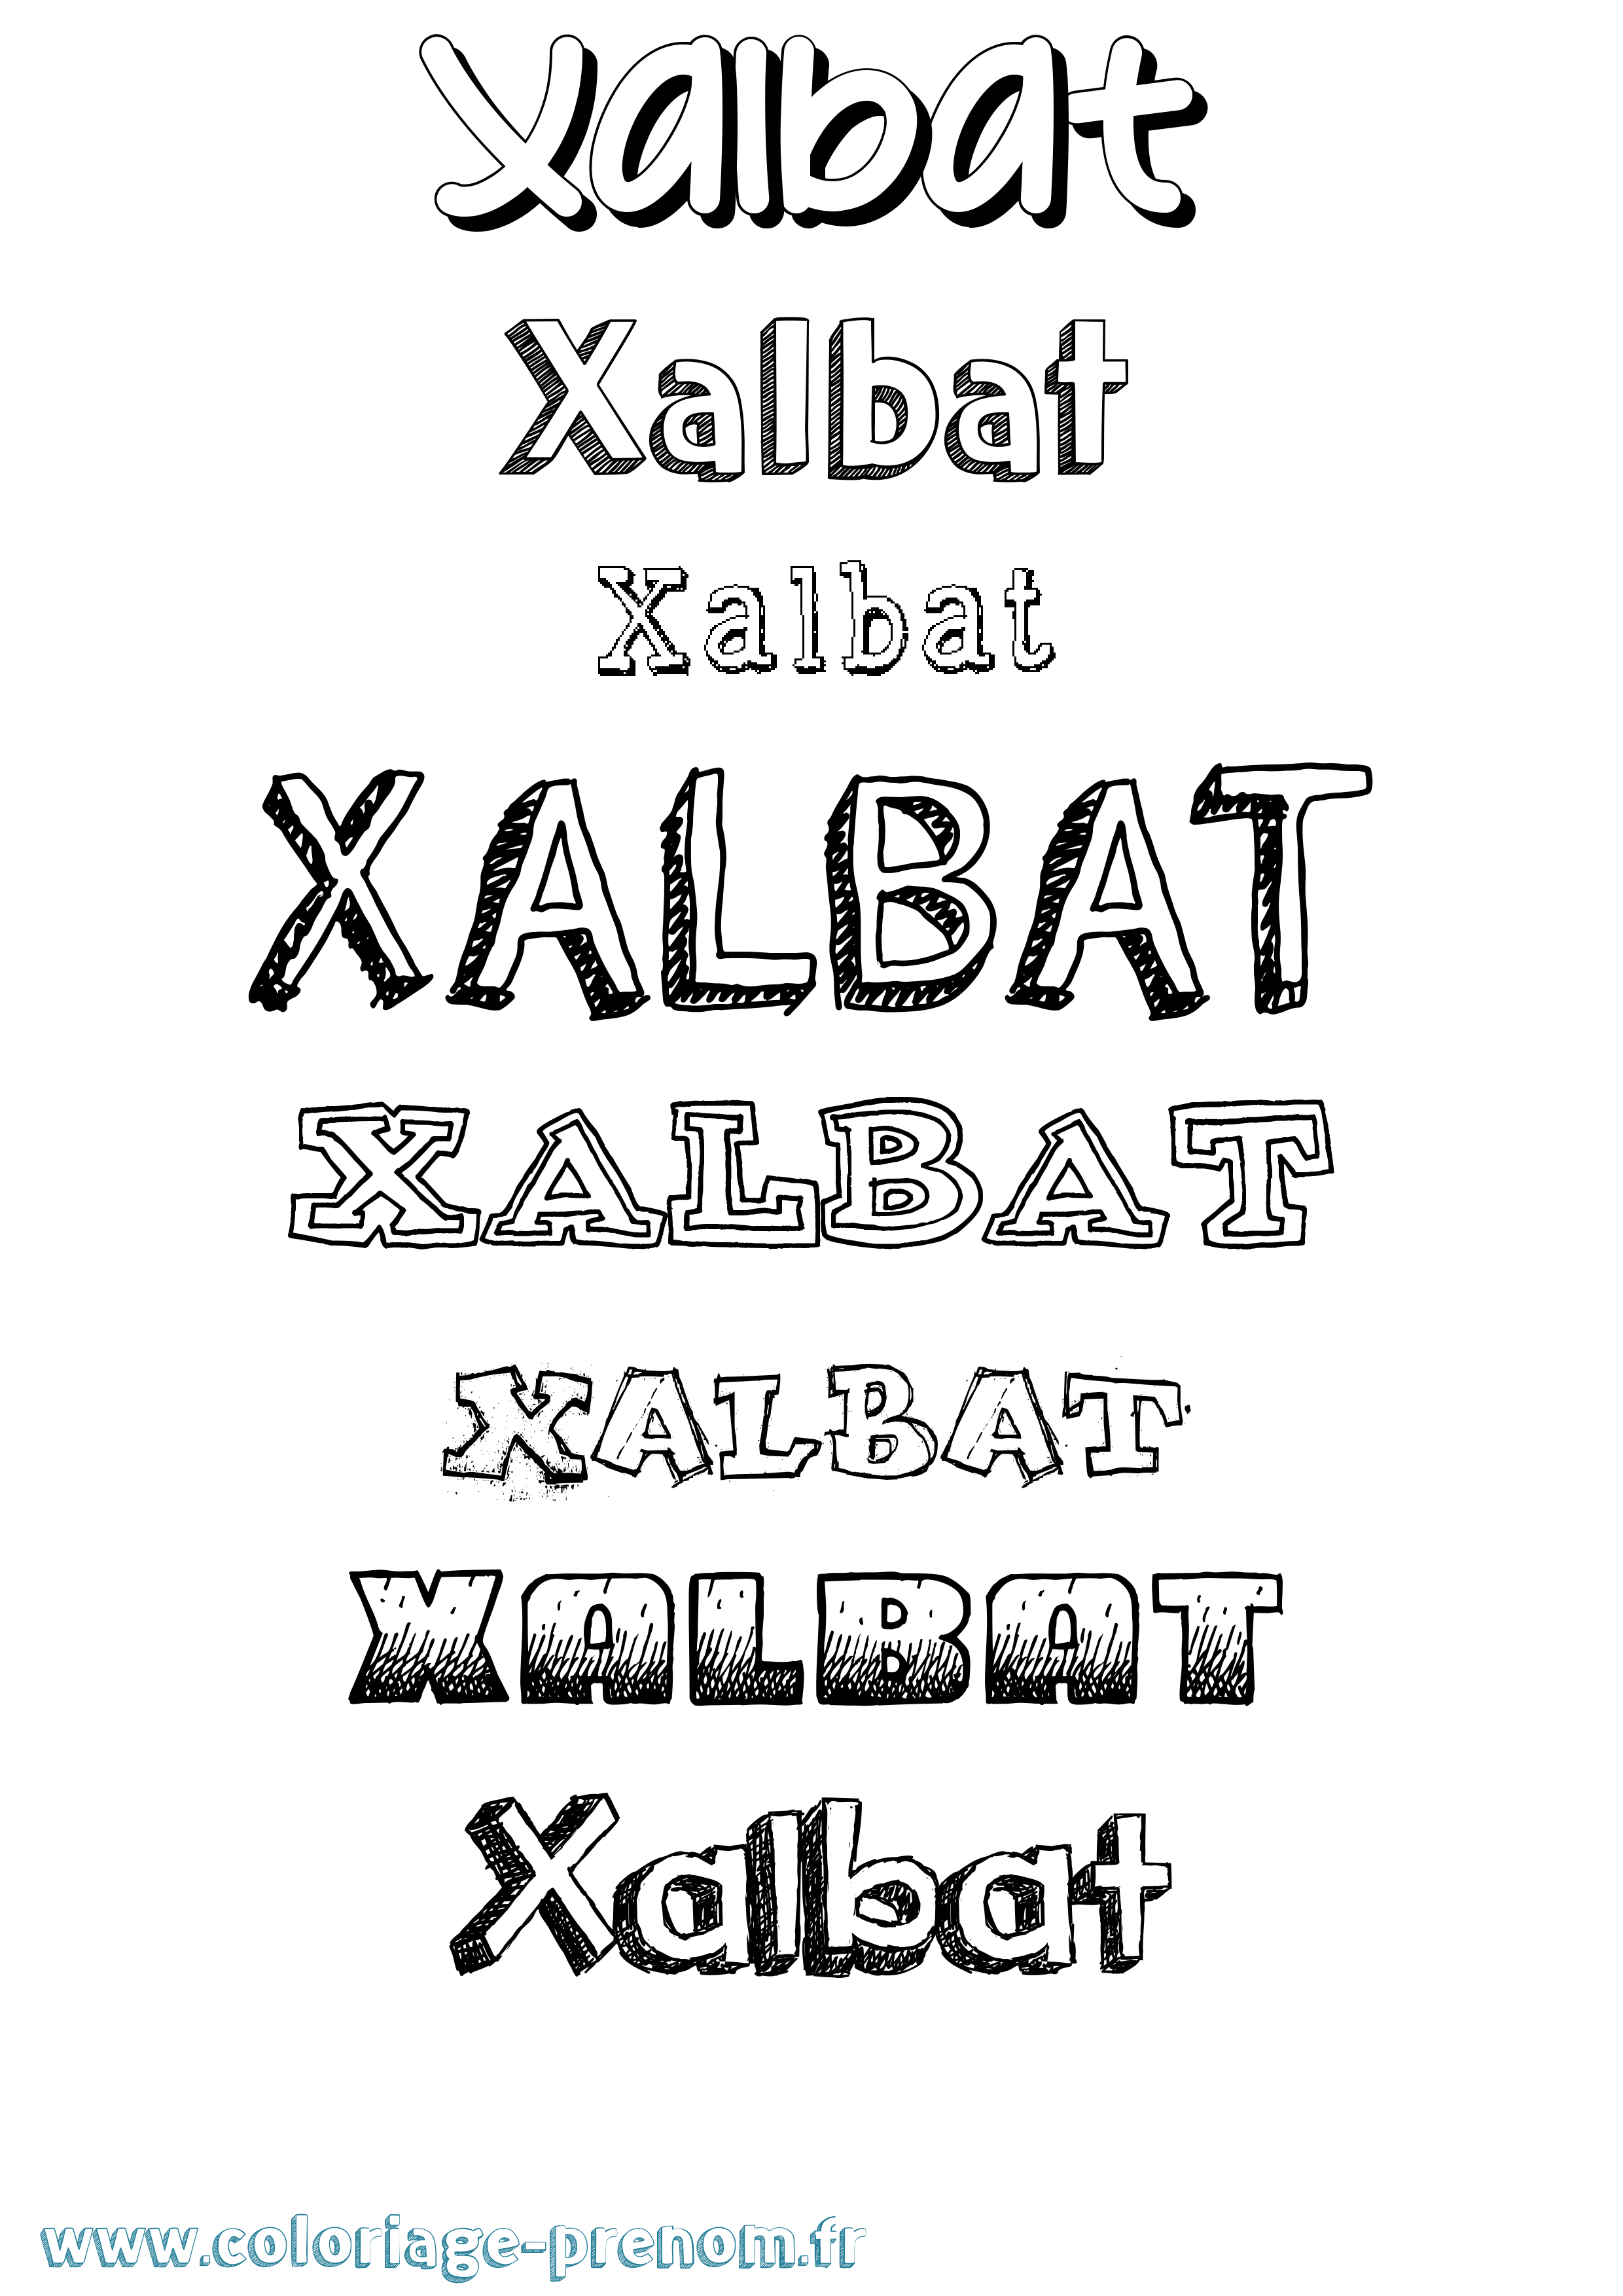 Coloriage prénom Xalbat Dessiné